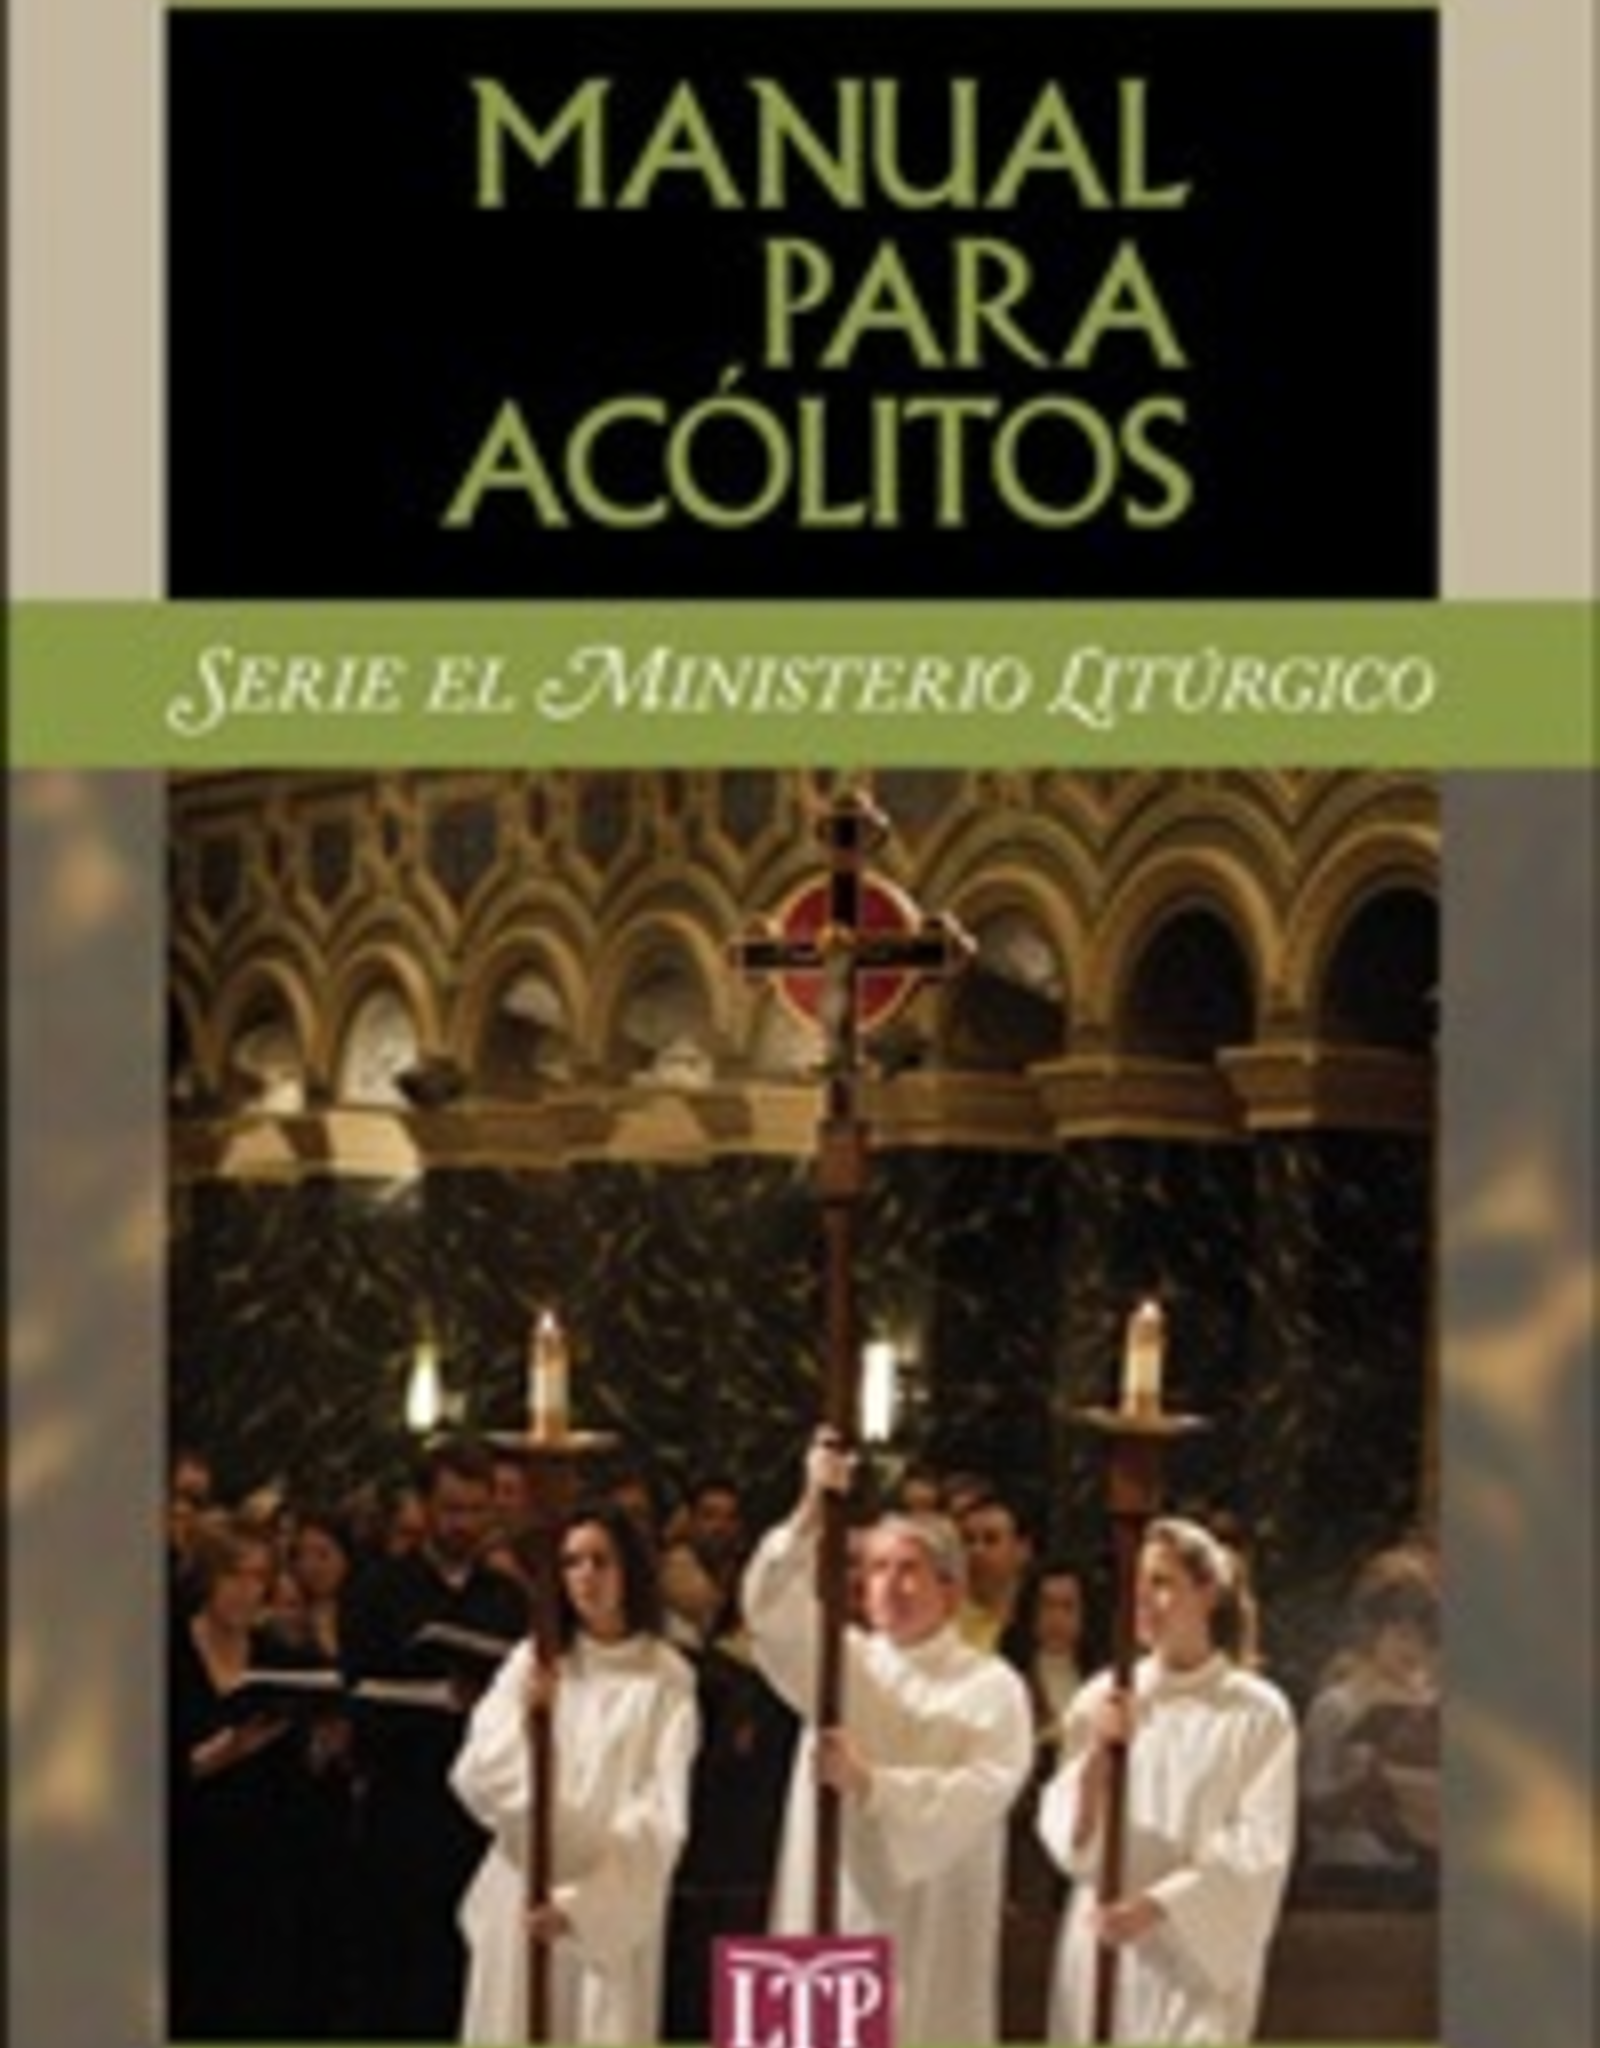 Liturgical Training Press Manual para acÌ_litos, by Corinna Laughlin, Paul Turner, Robert D. Shadduck, and D. Todd Williamson